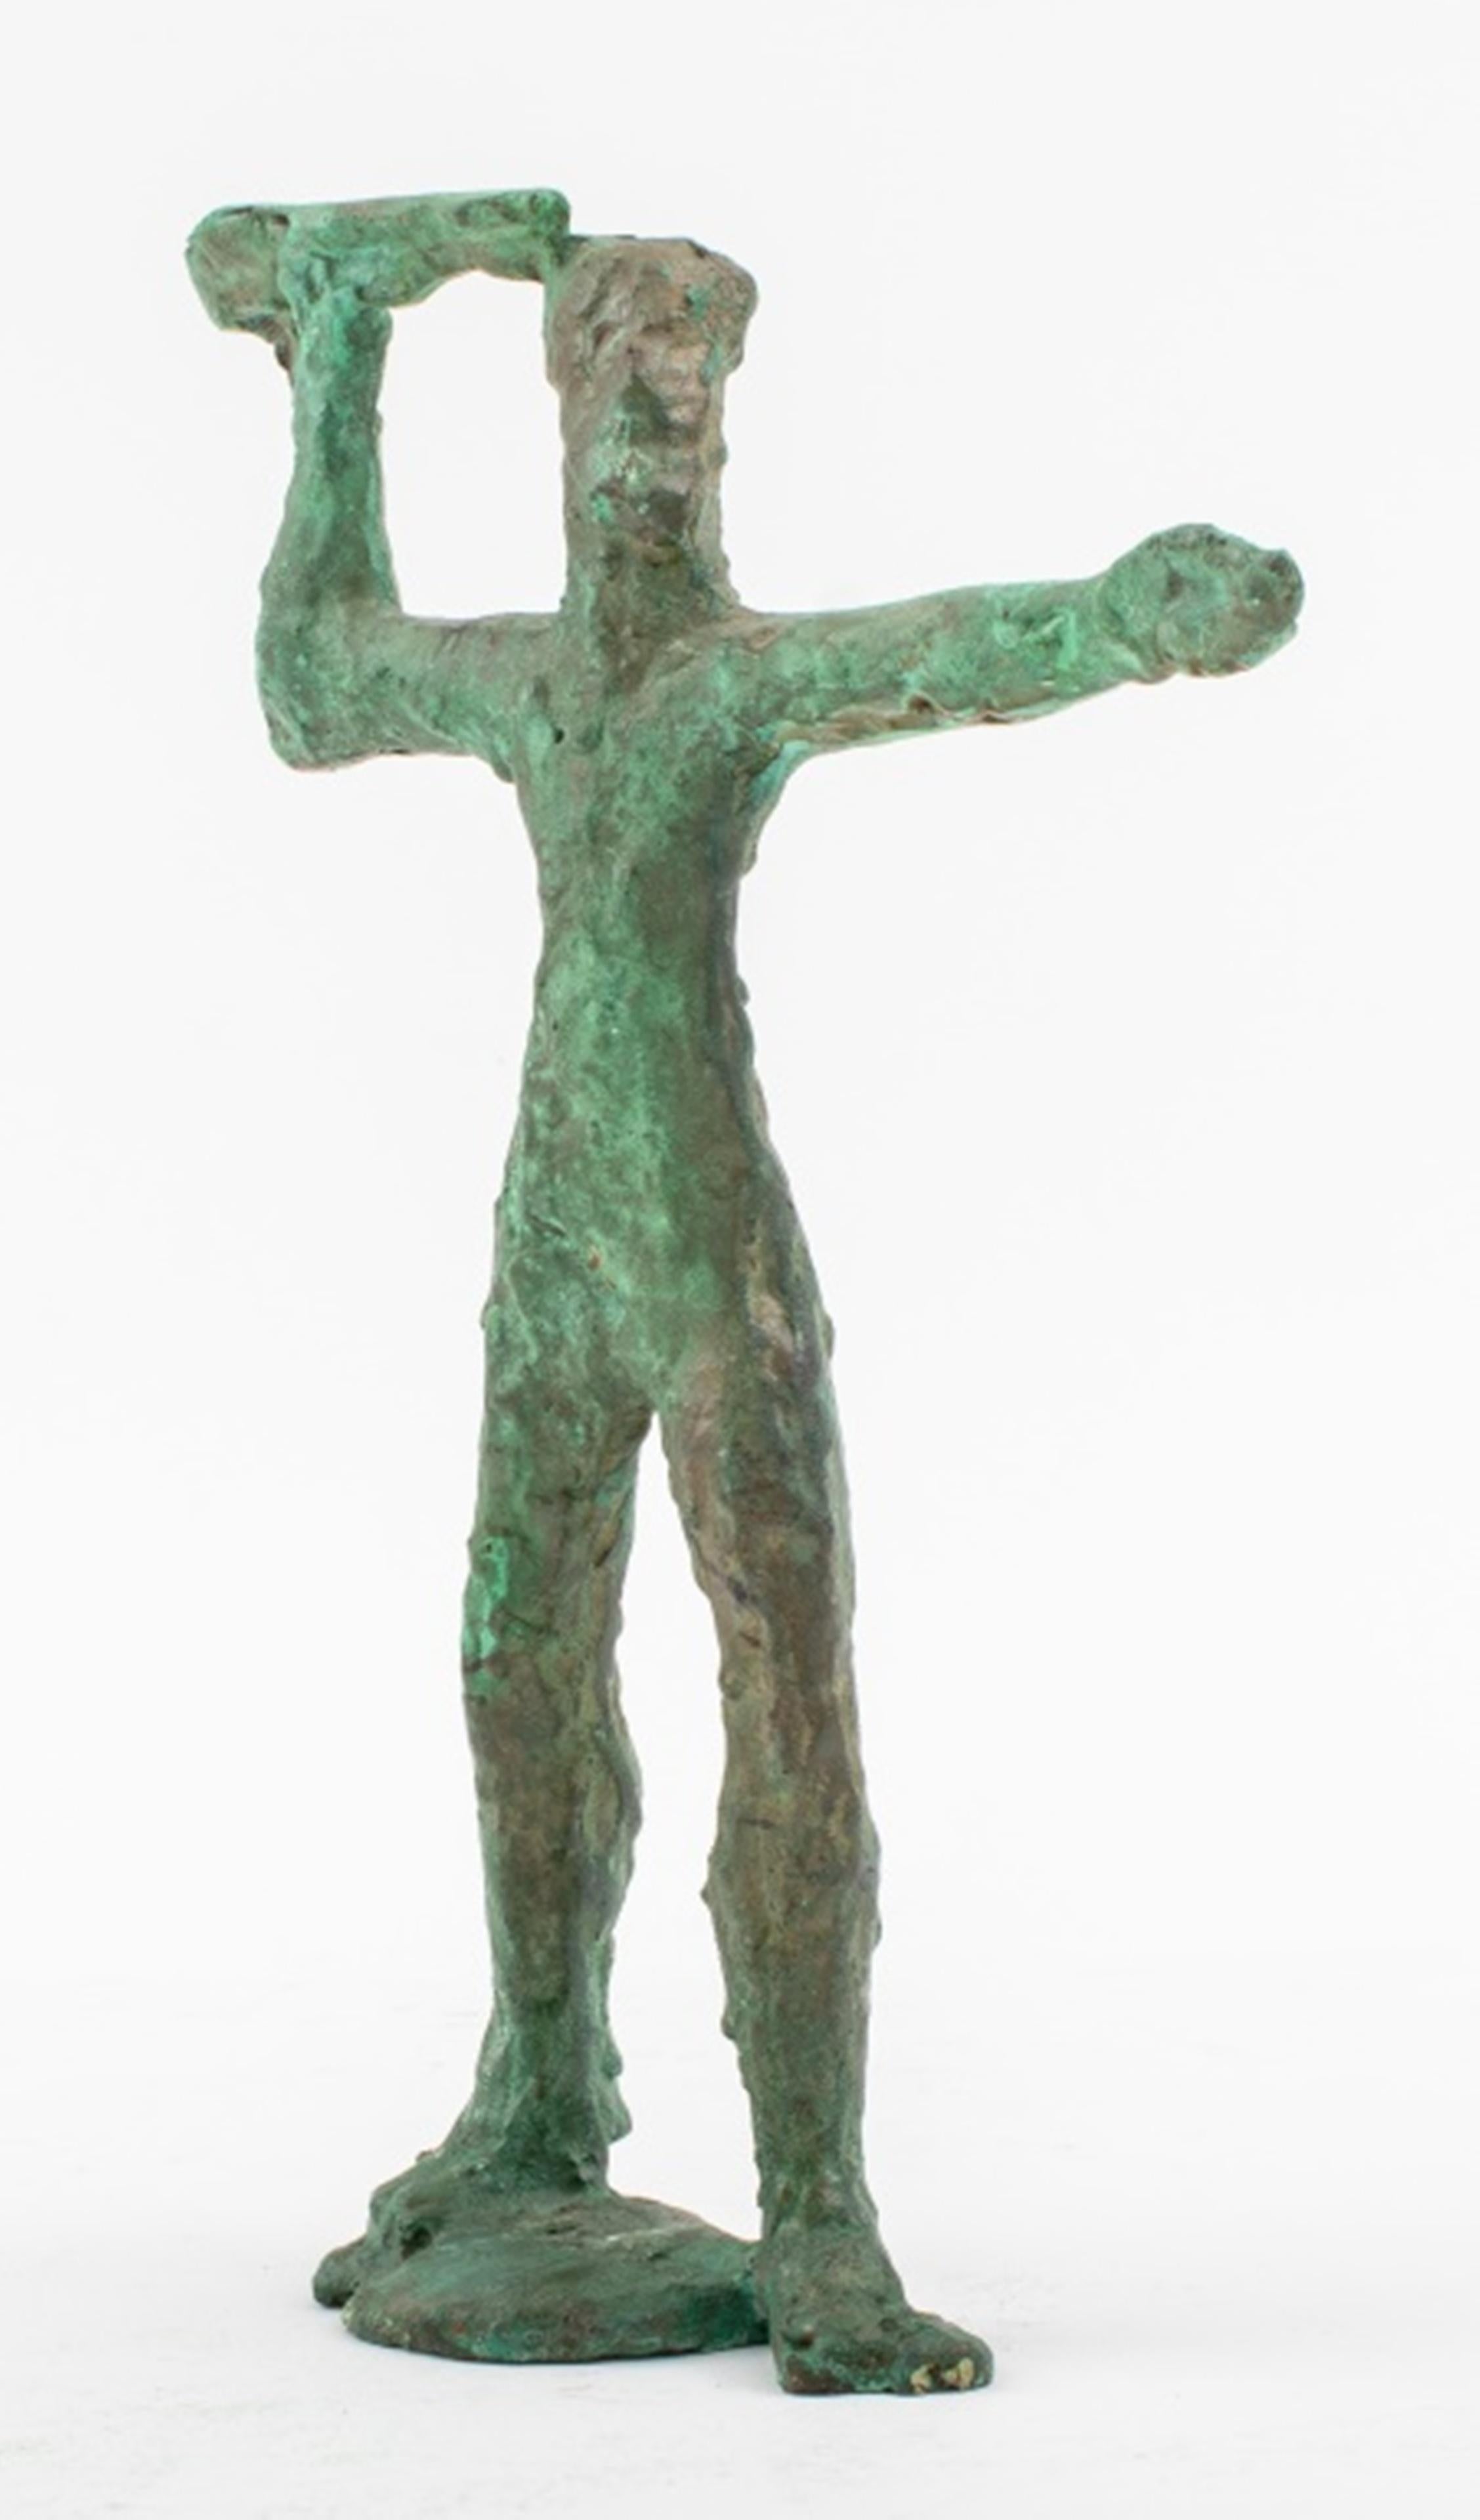 Italian Brutalist verdigris bronze sculpture of the Roman God Jupiter, wielding his thunderbolt. 9/5